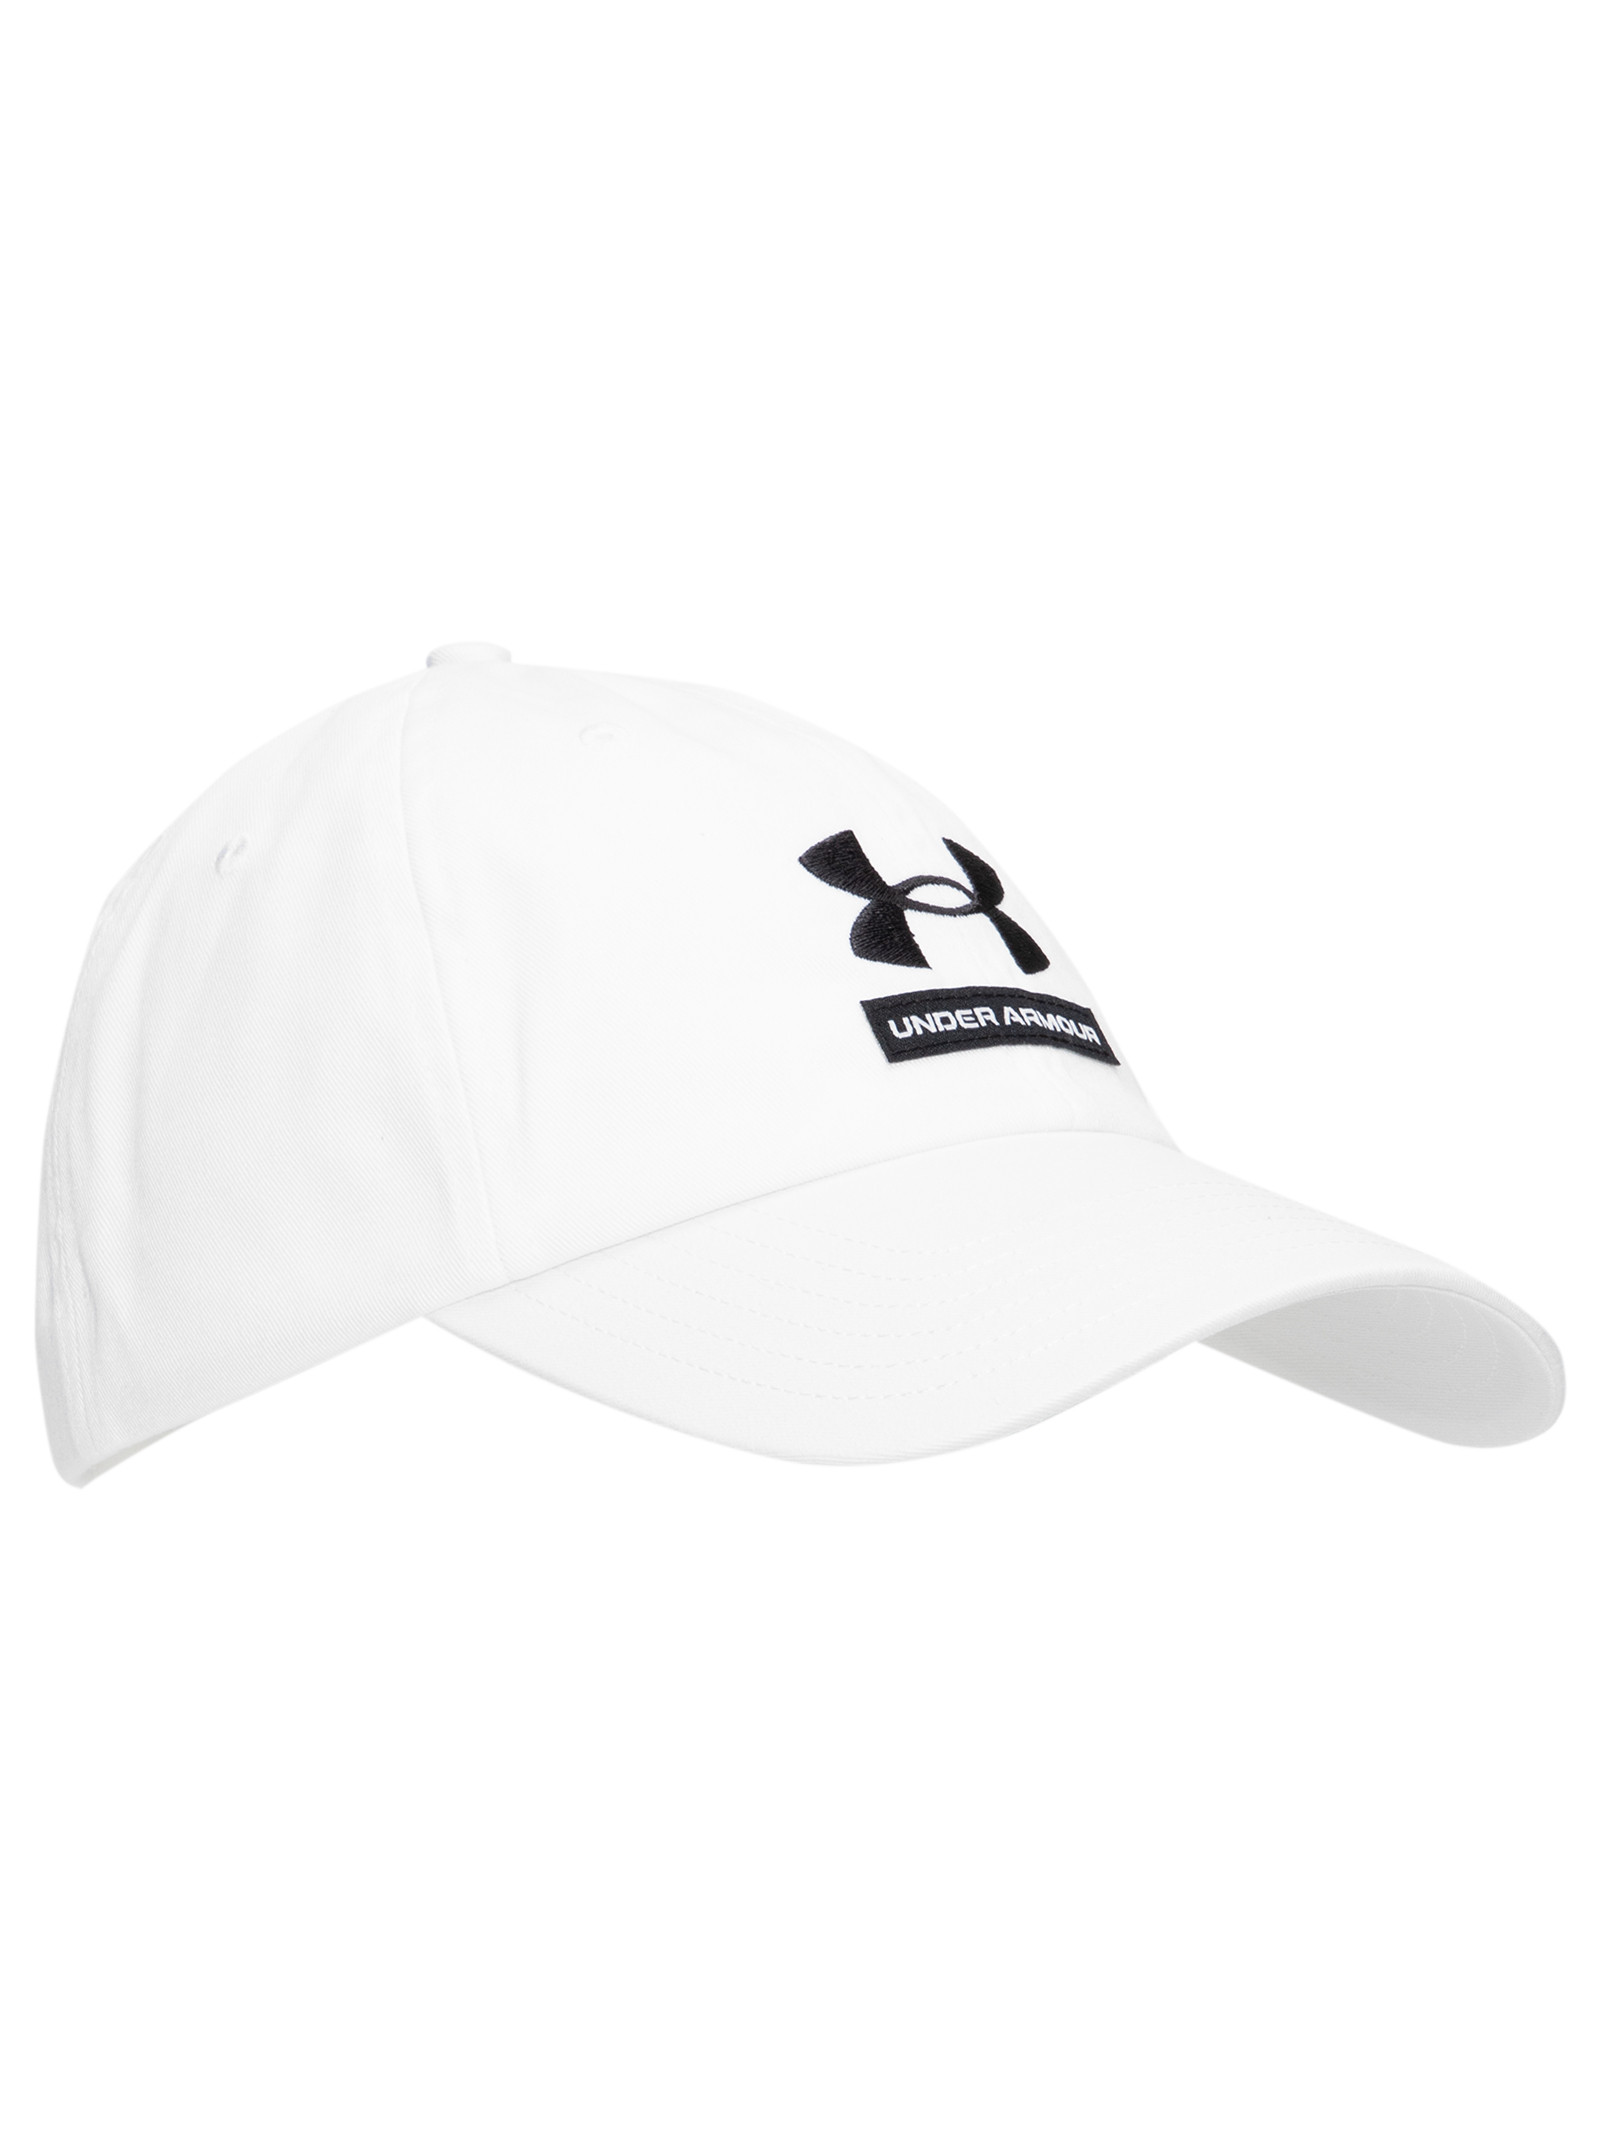 Boné Masculino Branded Hat - Under Armour - Branco - Shop2gether